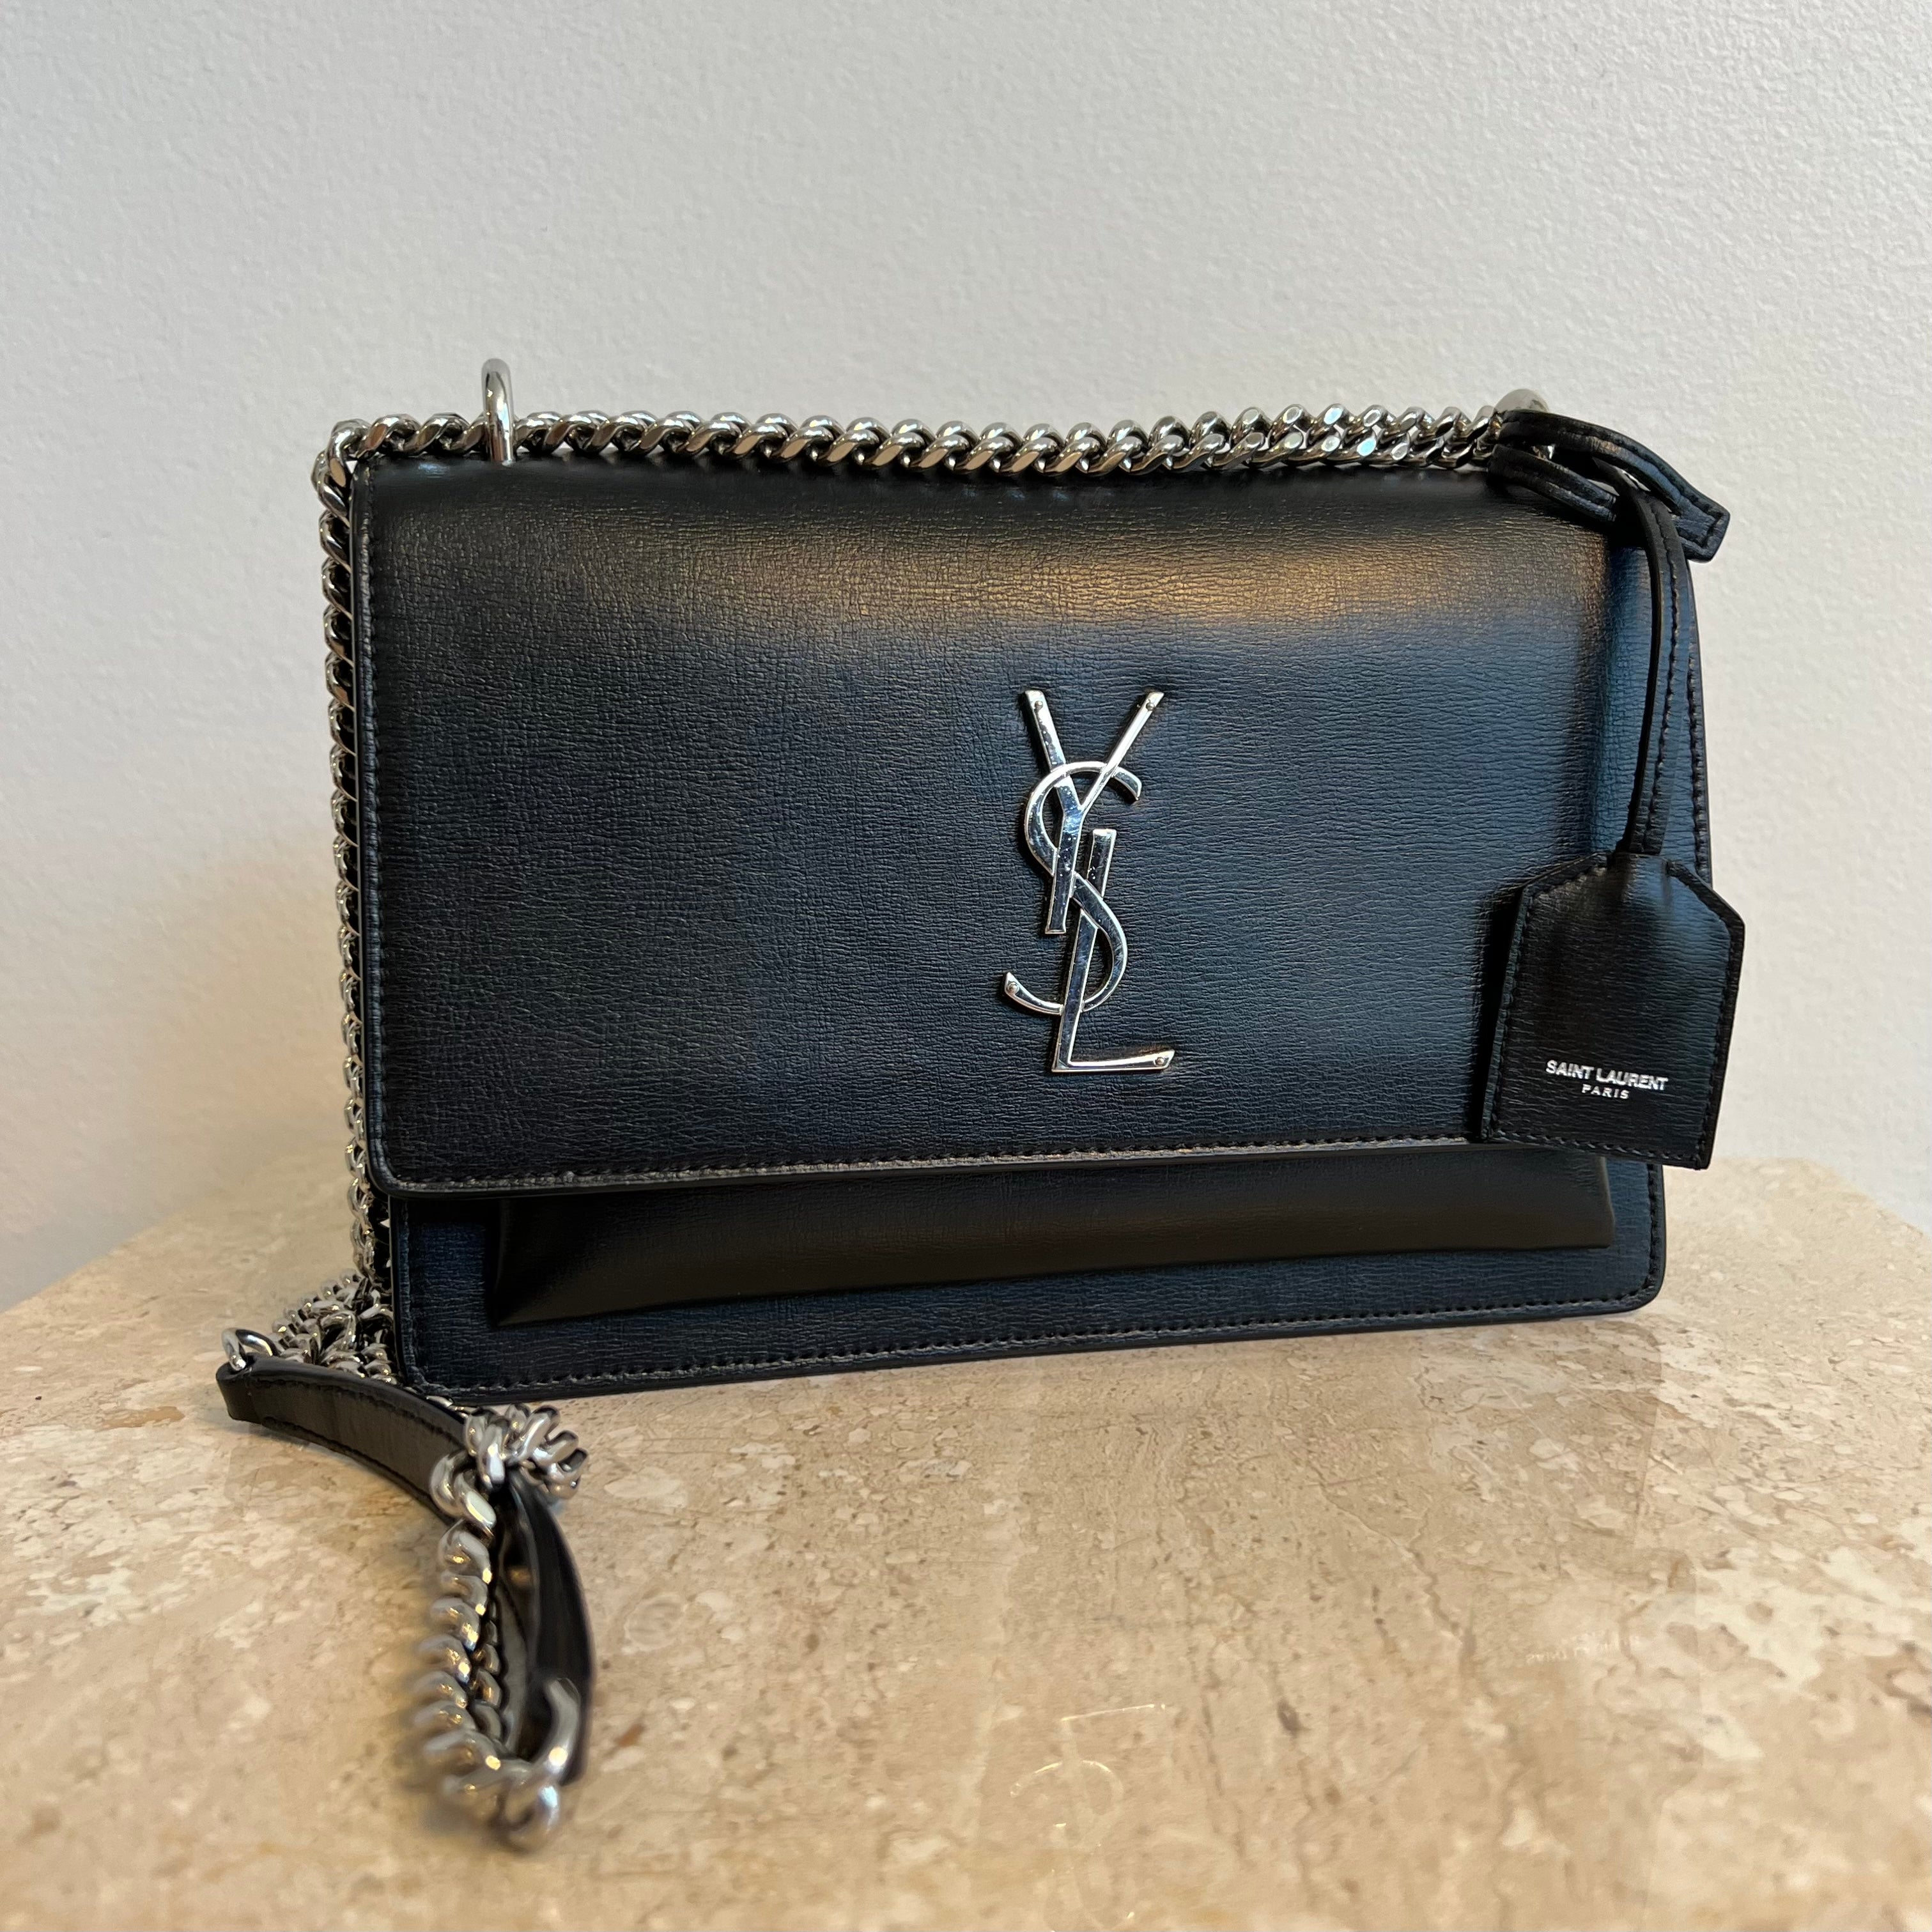 Yves Saint Laurent  Bags  Authentic Ysl Bag  Poshmark